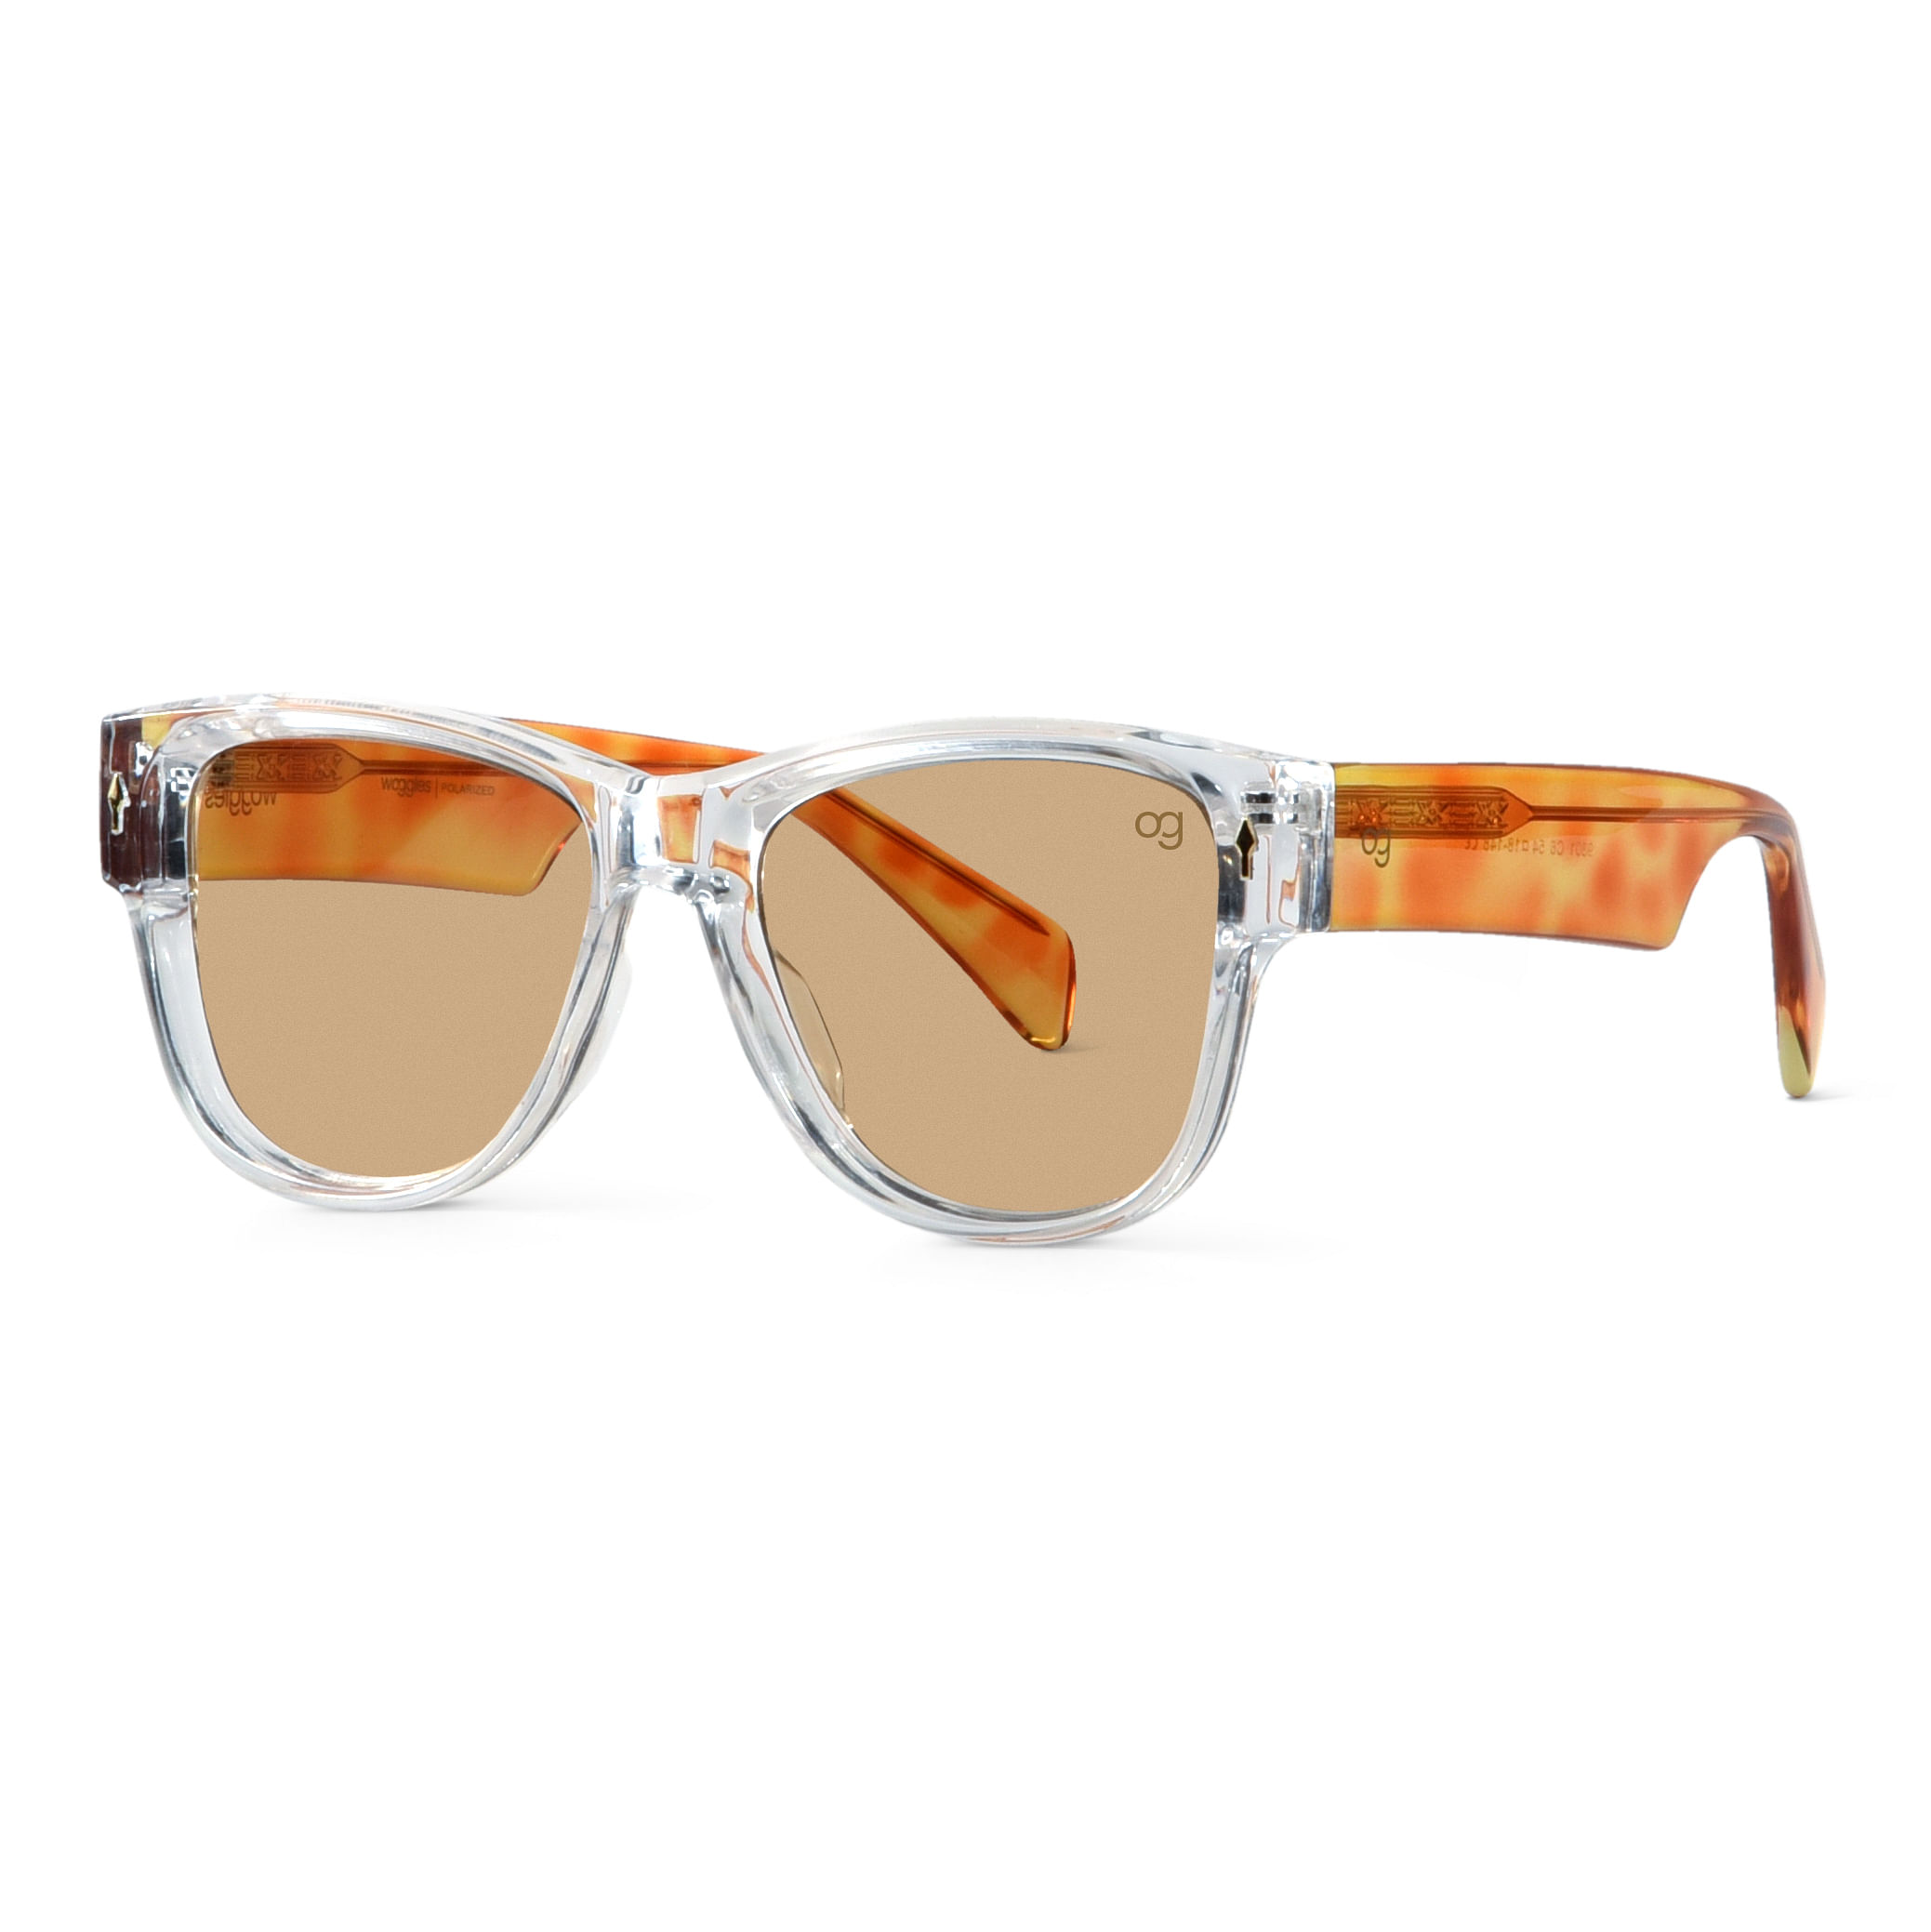 Walnut Wood Classic Sunglasses Semi-Transparent Frame Black Lenses